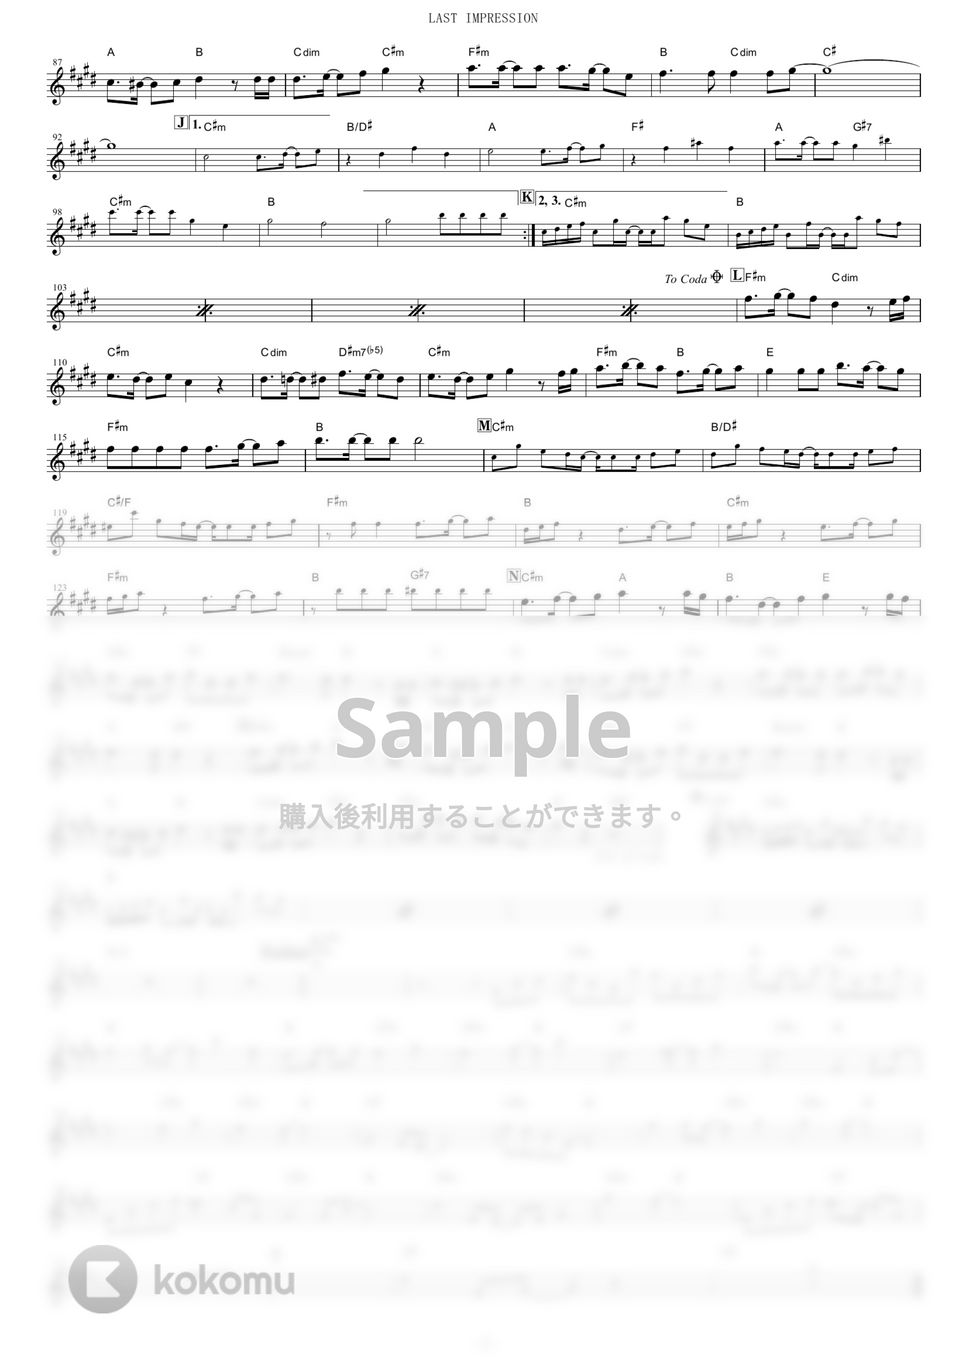 TWO-MIX - LAST IMPRESSION (『新機動戦記ガンダムW Endless Waltz 特別編』 / in Eb) by muta-sax